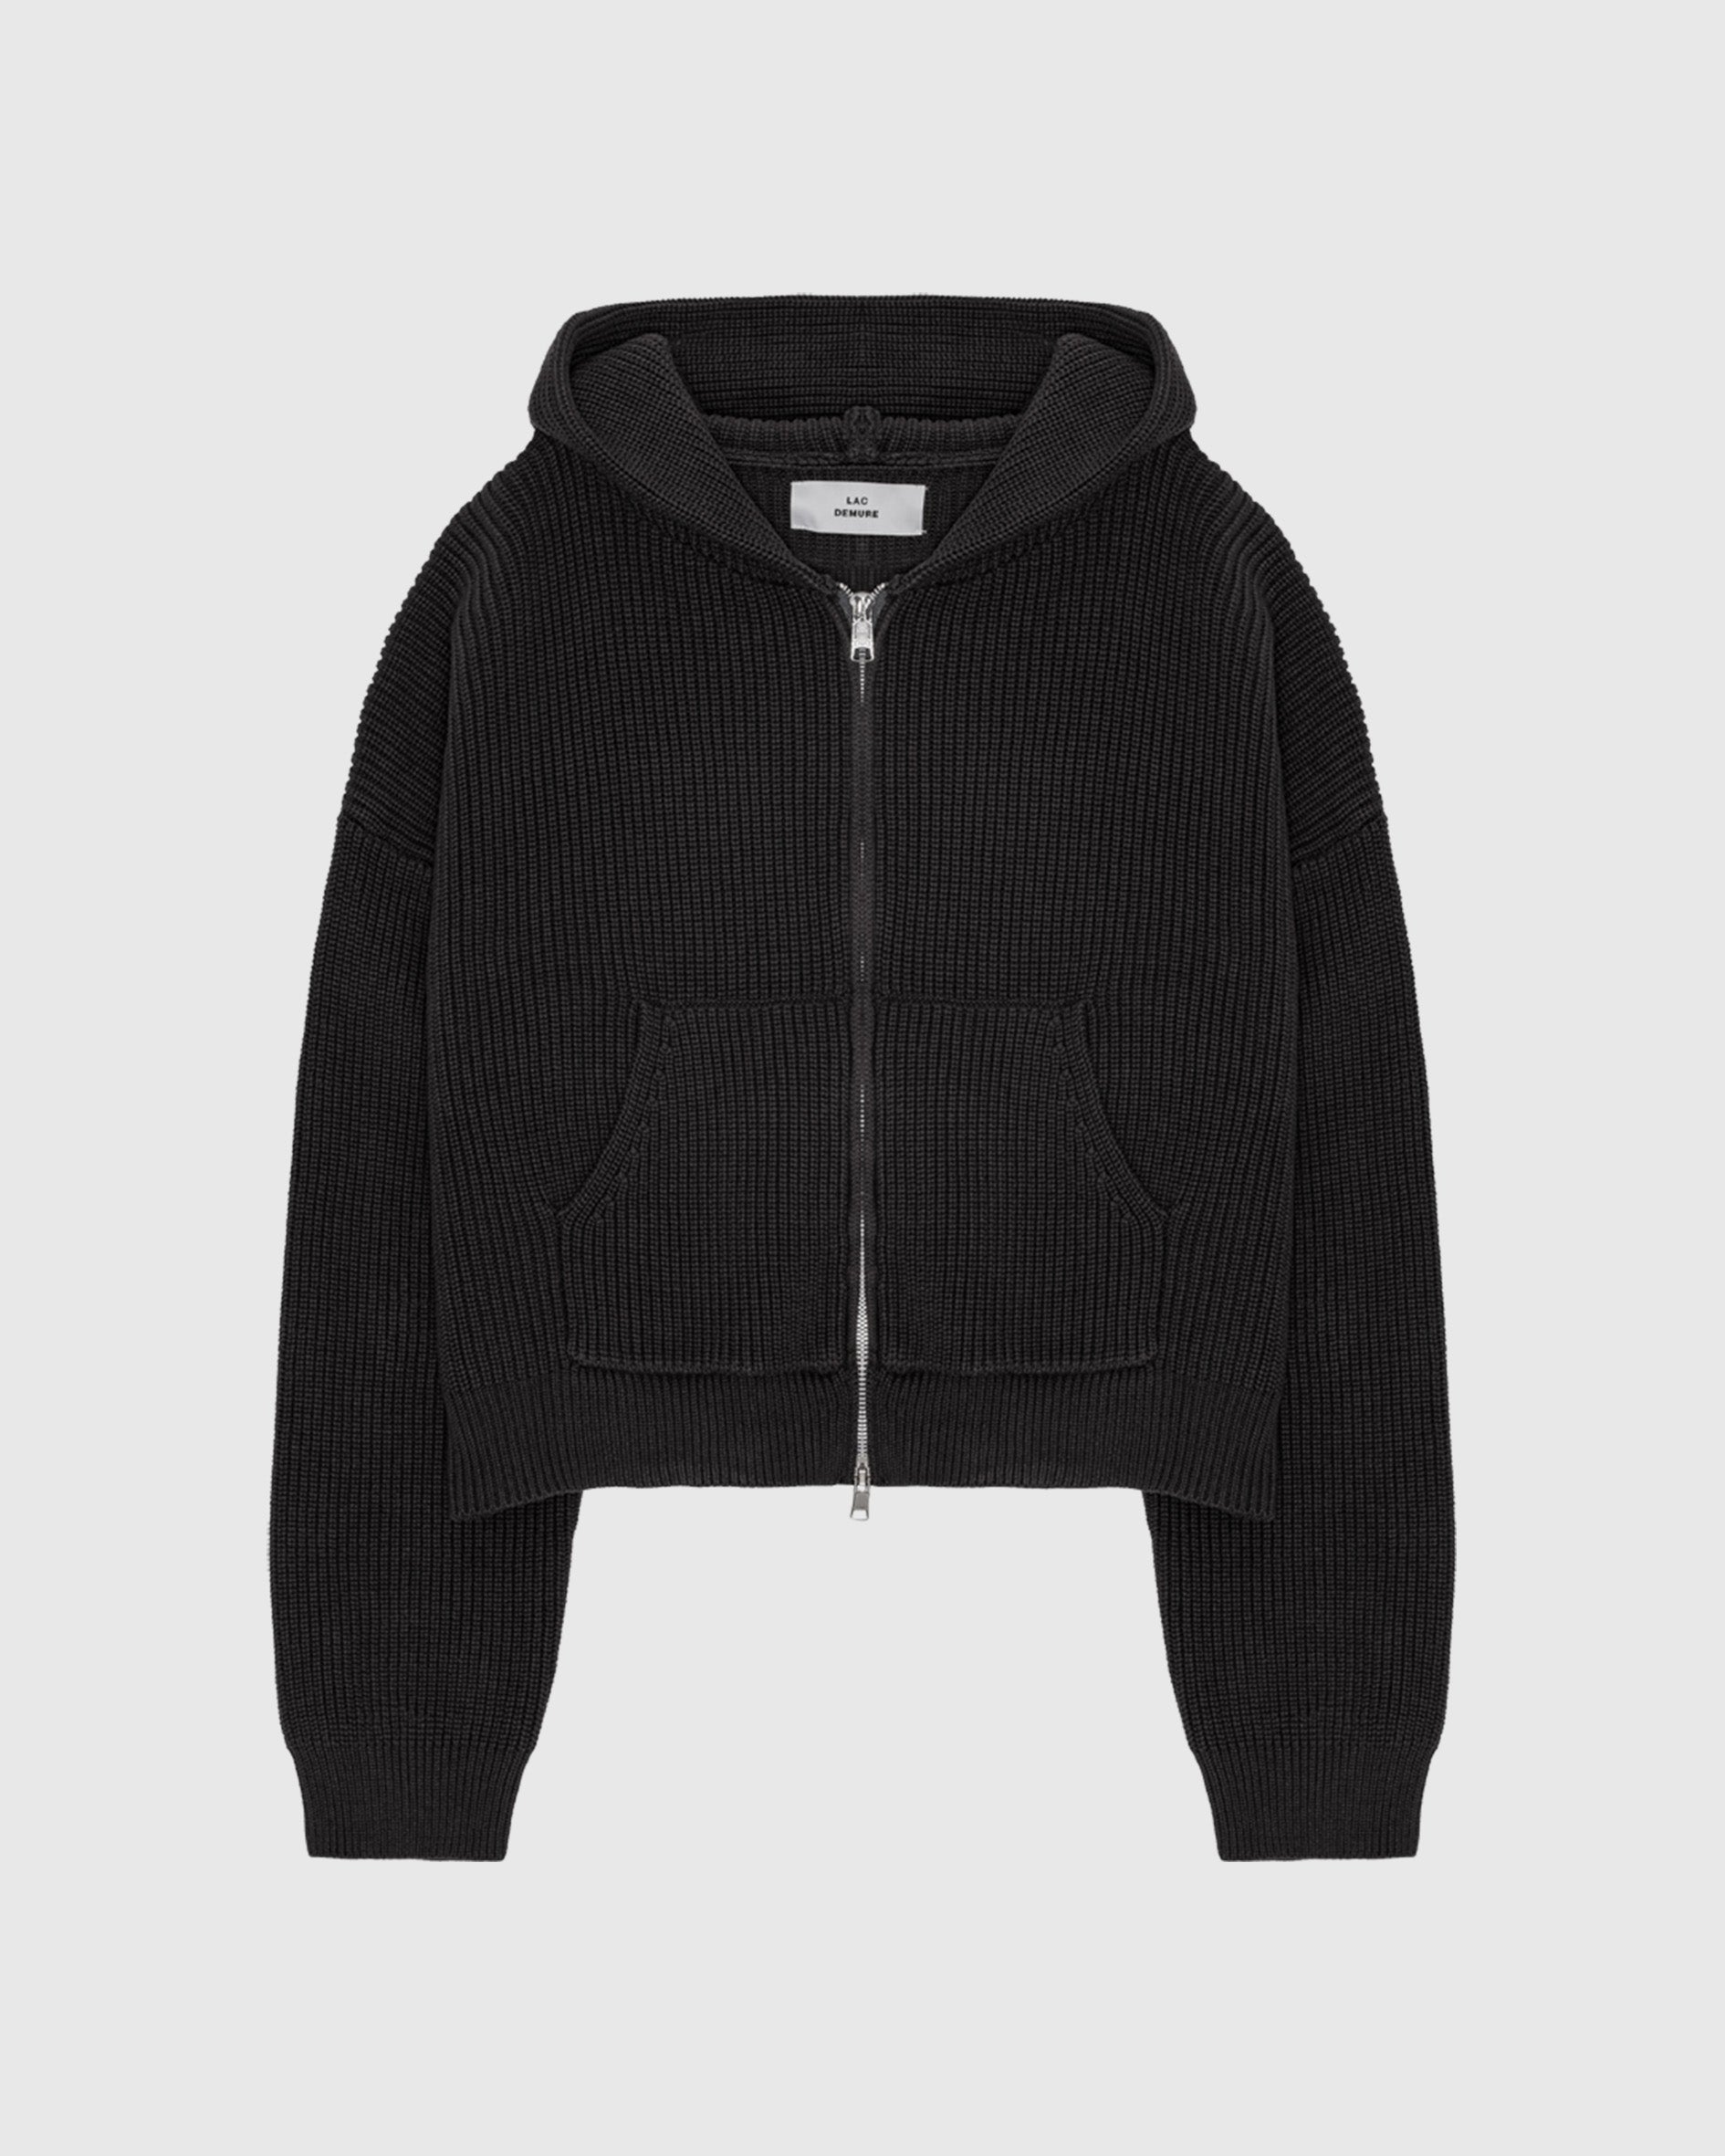 Yimoon Cropped Zip Up Hoodie for Women Waffle Knit Vintage cropped  Sweatshirt Casual Long Sleeve Hooded crop jacket